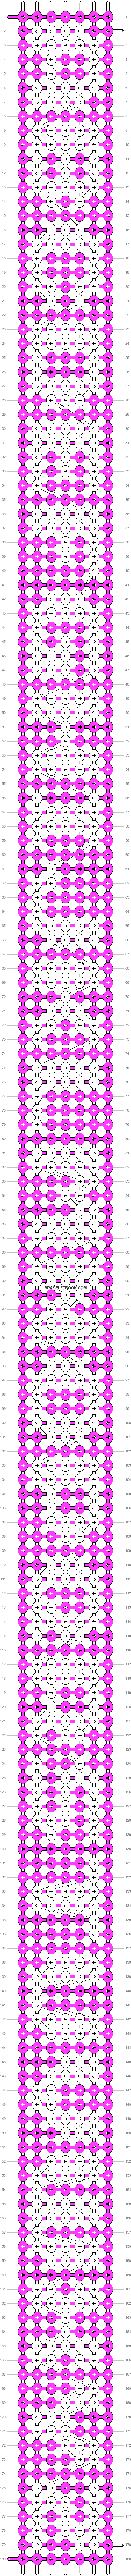 Alpha pattern #44226 variation #184698 pattern